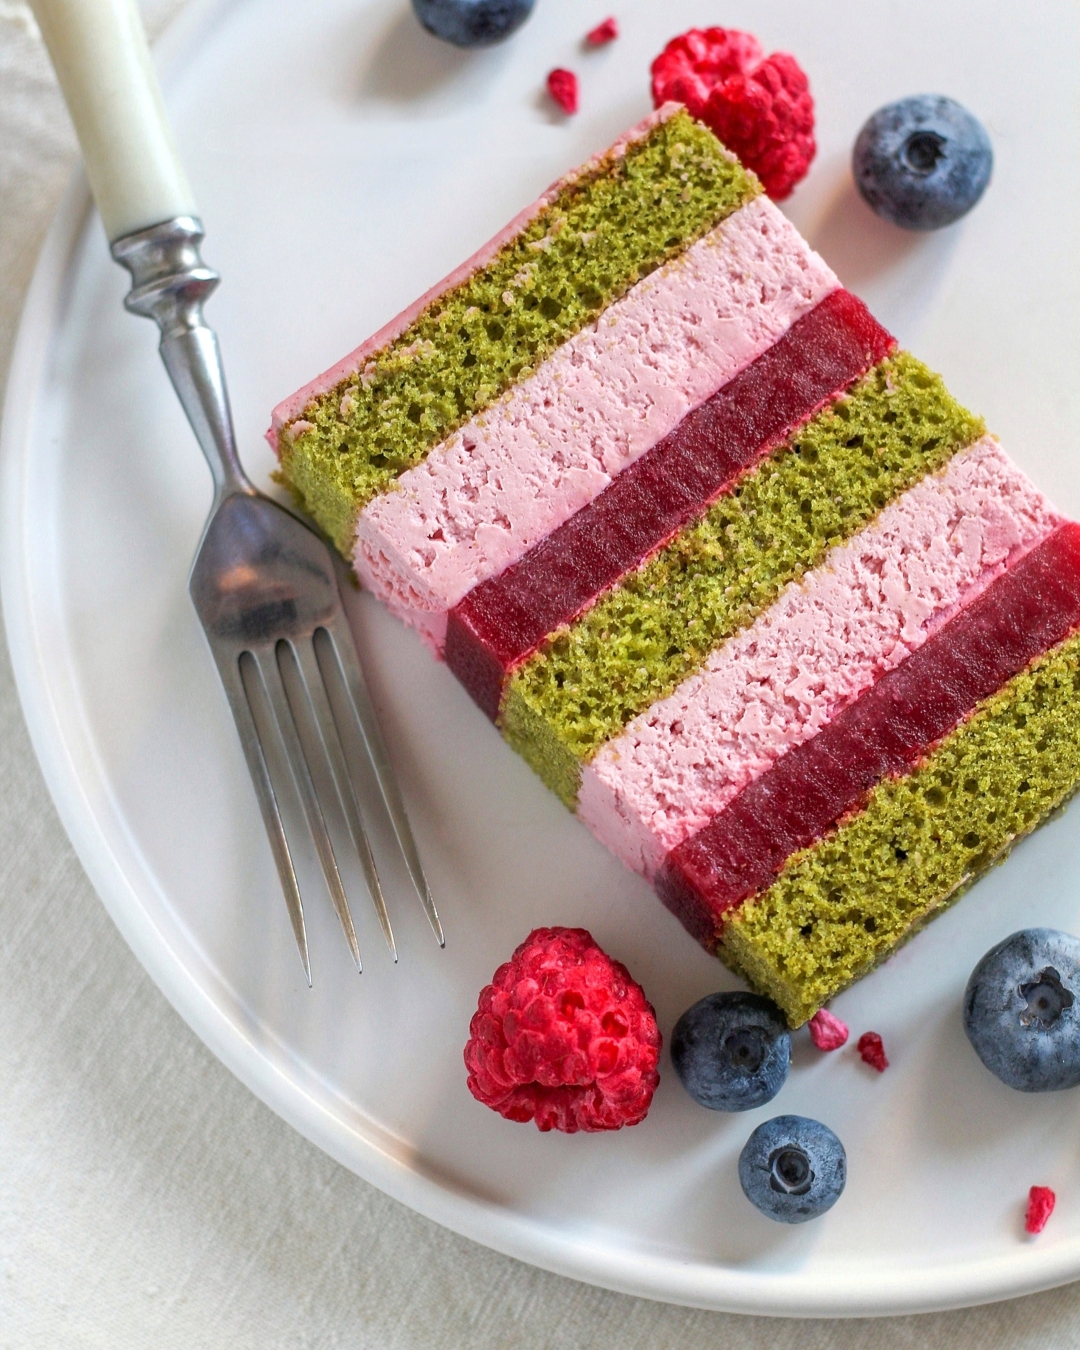 Matcha tea cake with raspberry